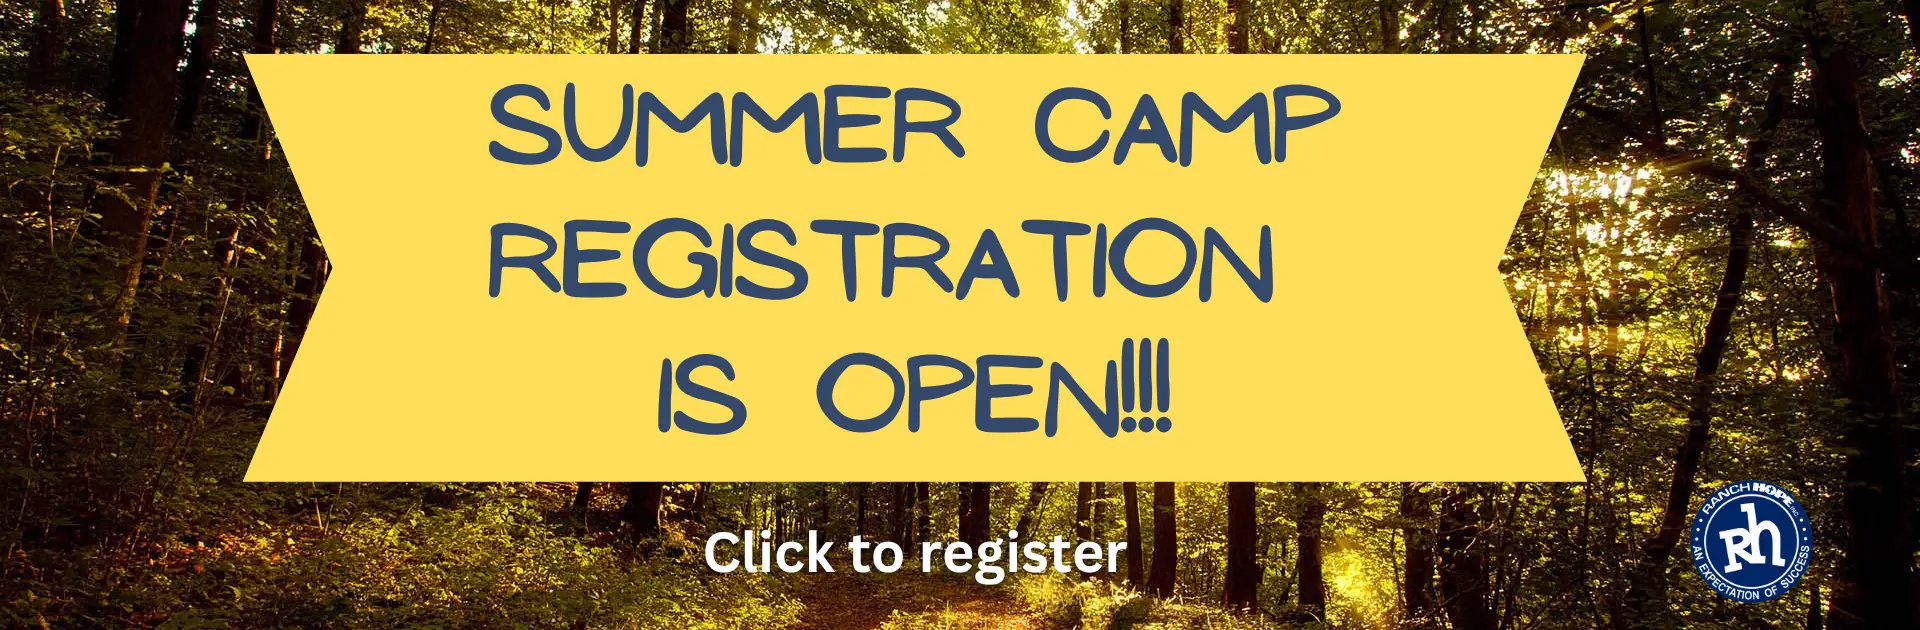 Summer Camp Registration is open!